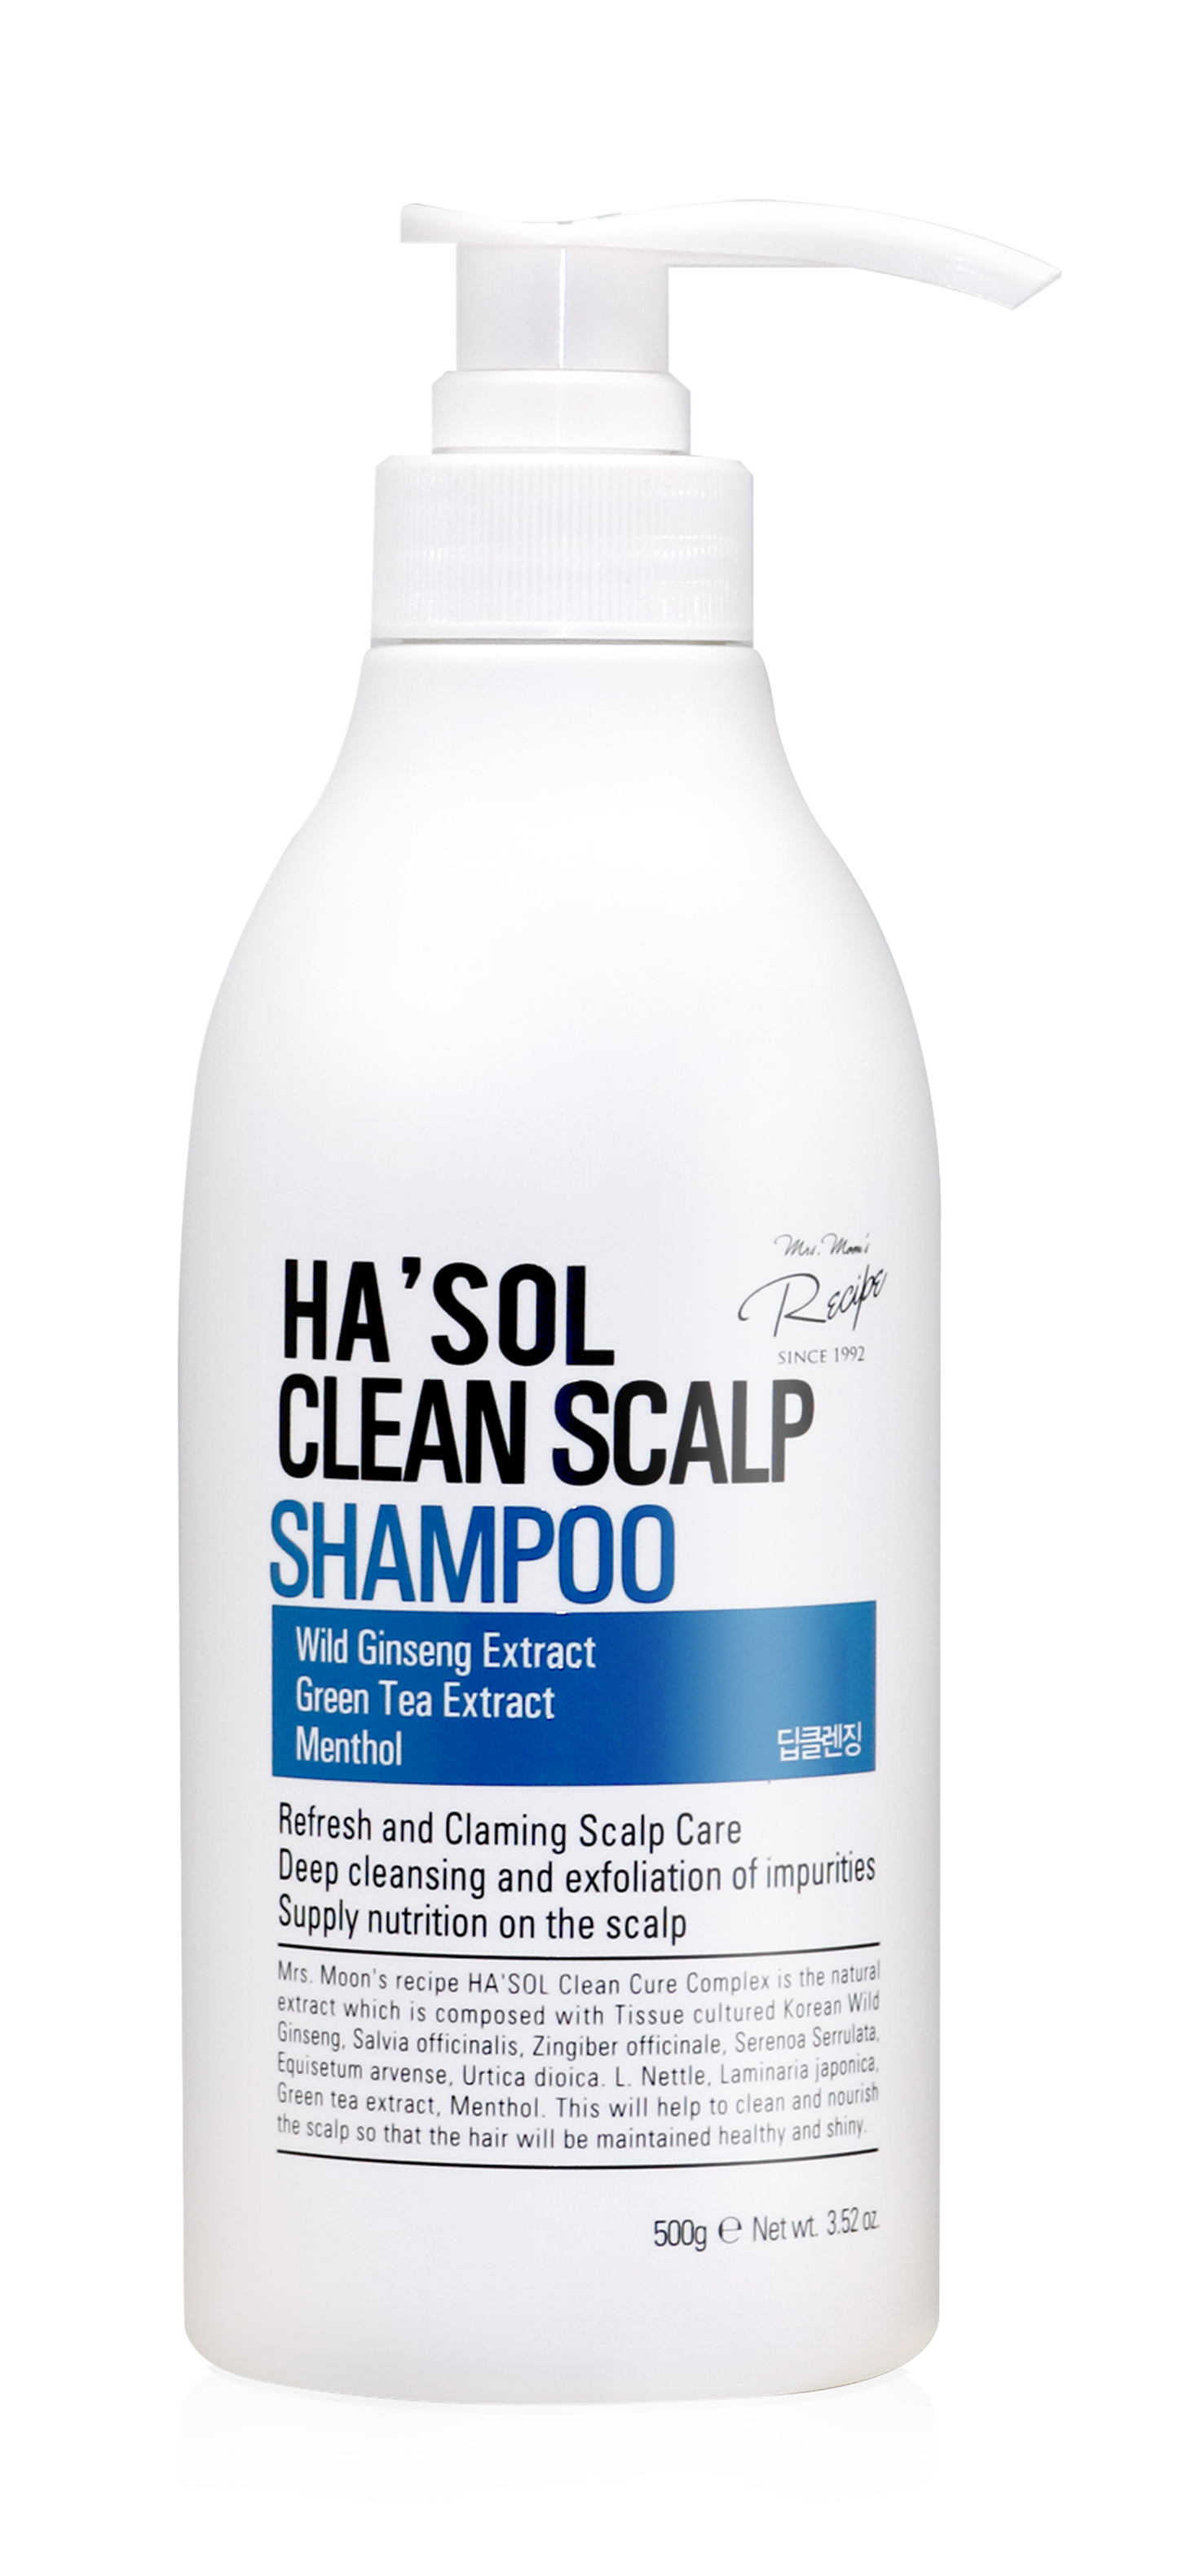 Aromatica шампунь с протеинами для повреждённых волос - Quinoa Protein Shampoo, 400мл. Шампунь Tune 500 мл. Глубокоочищающий шампунь с ментолом Welcos around me Scalp 500мл. Scalp cleansing